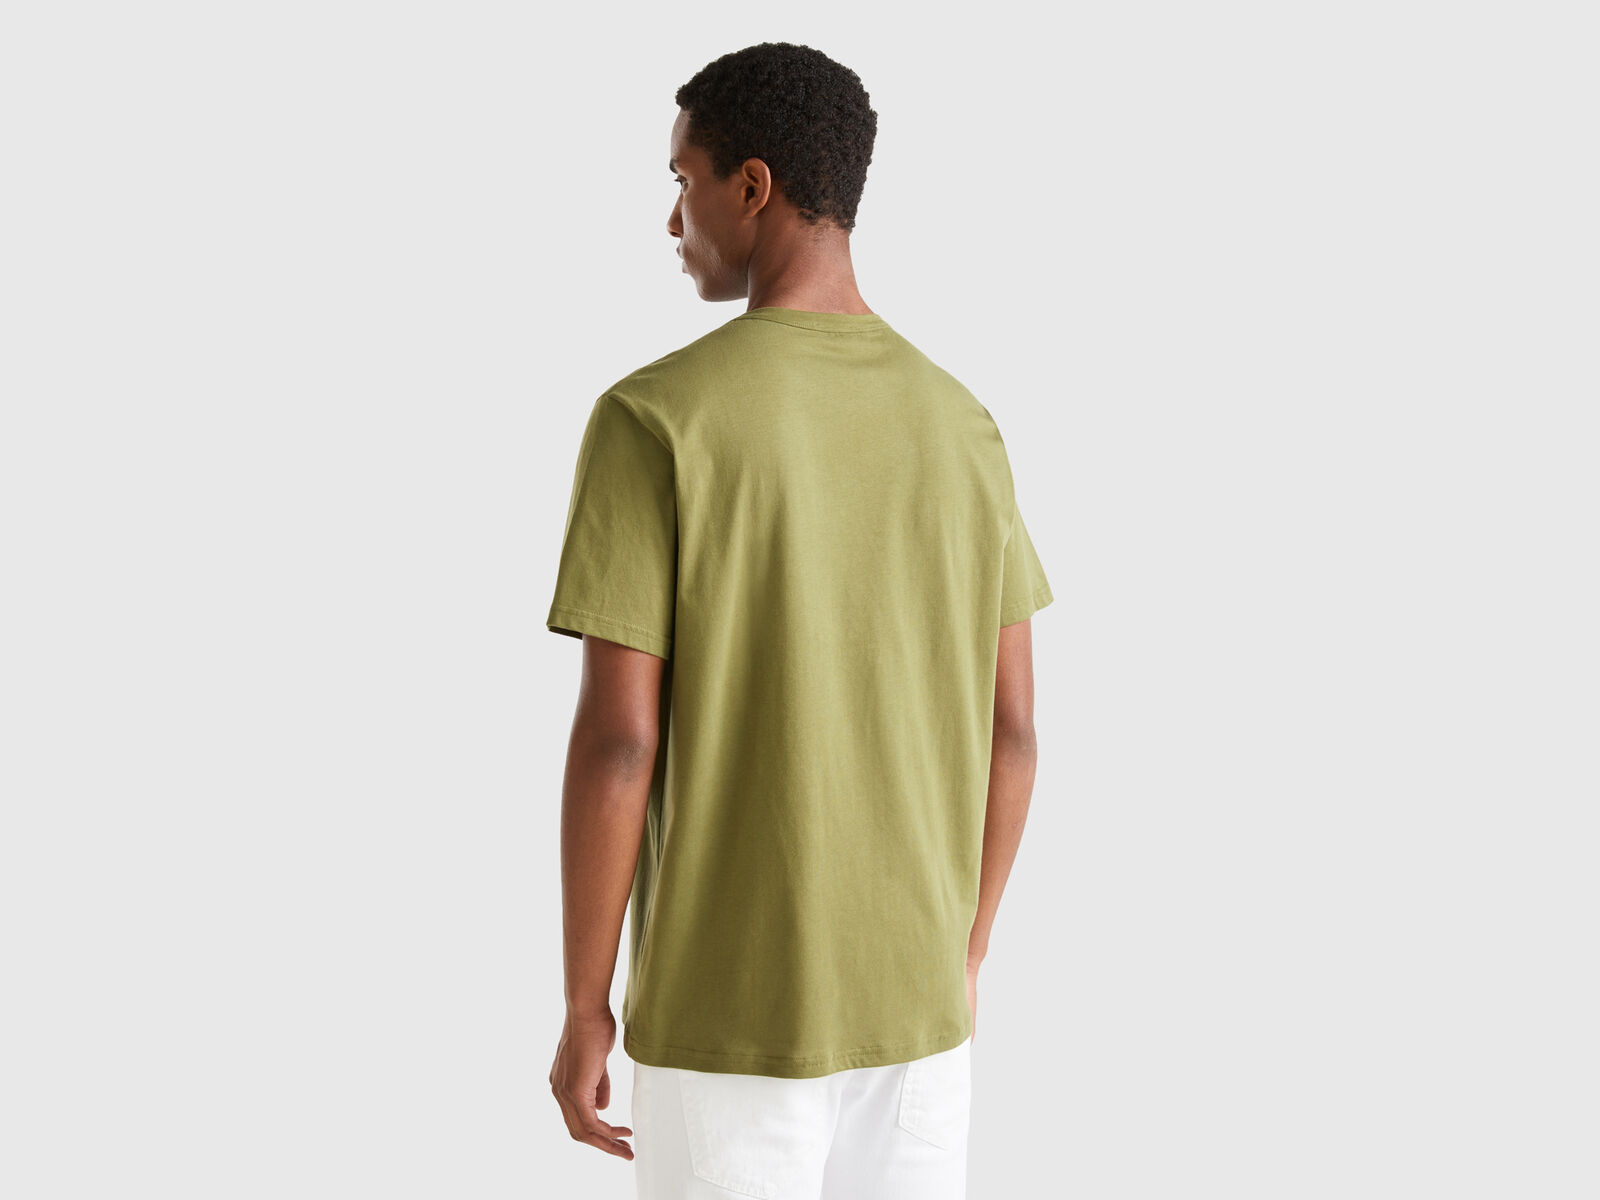 T-shirt in warm cotton - Military Green | Benetton